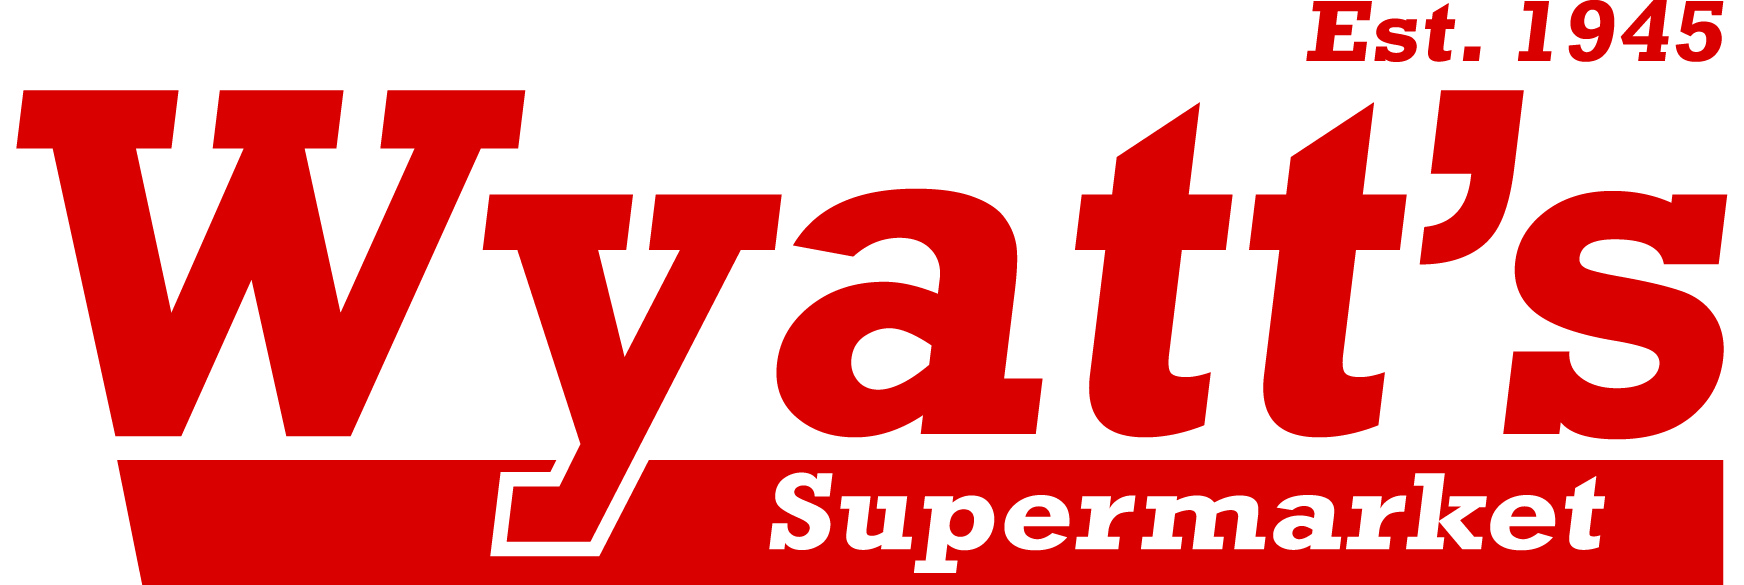 Wyatt's Supermarket